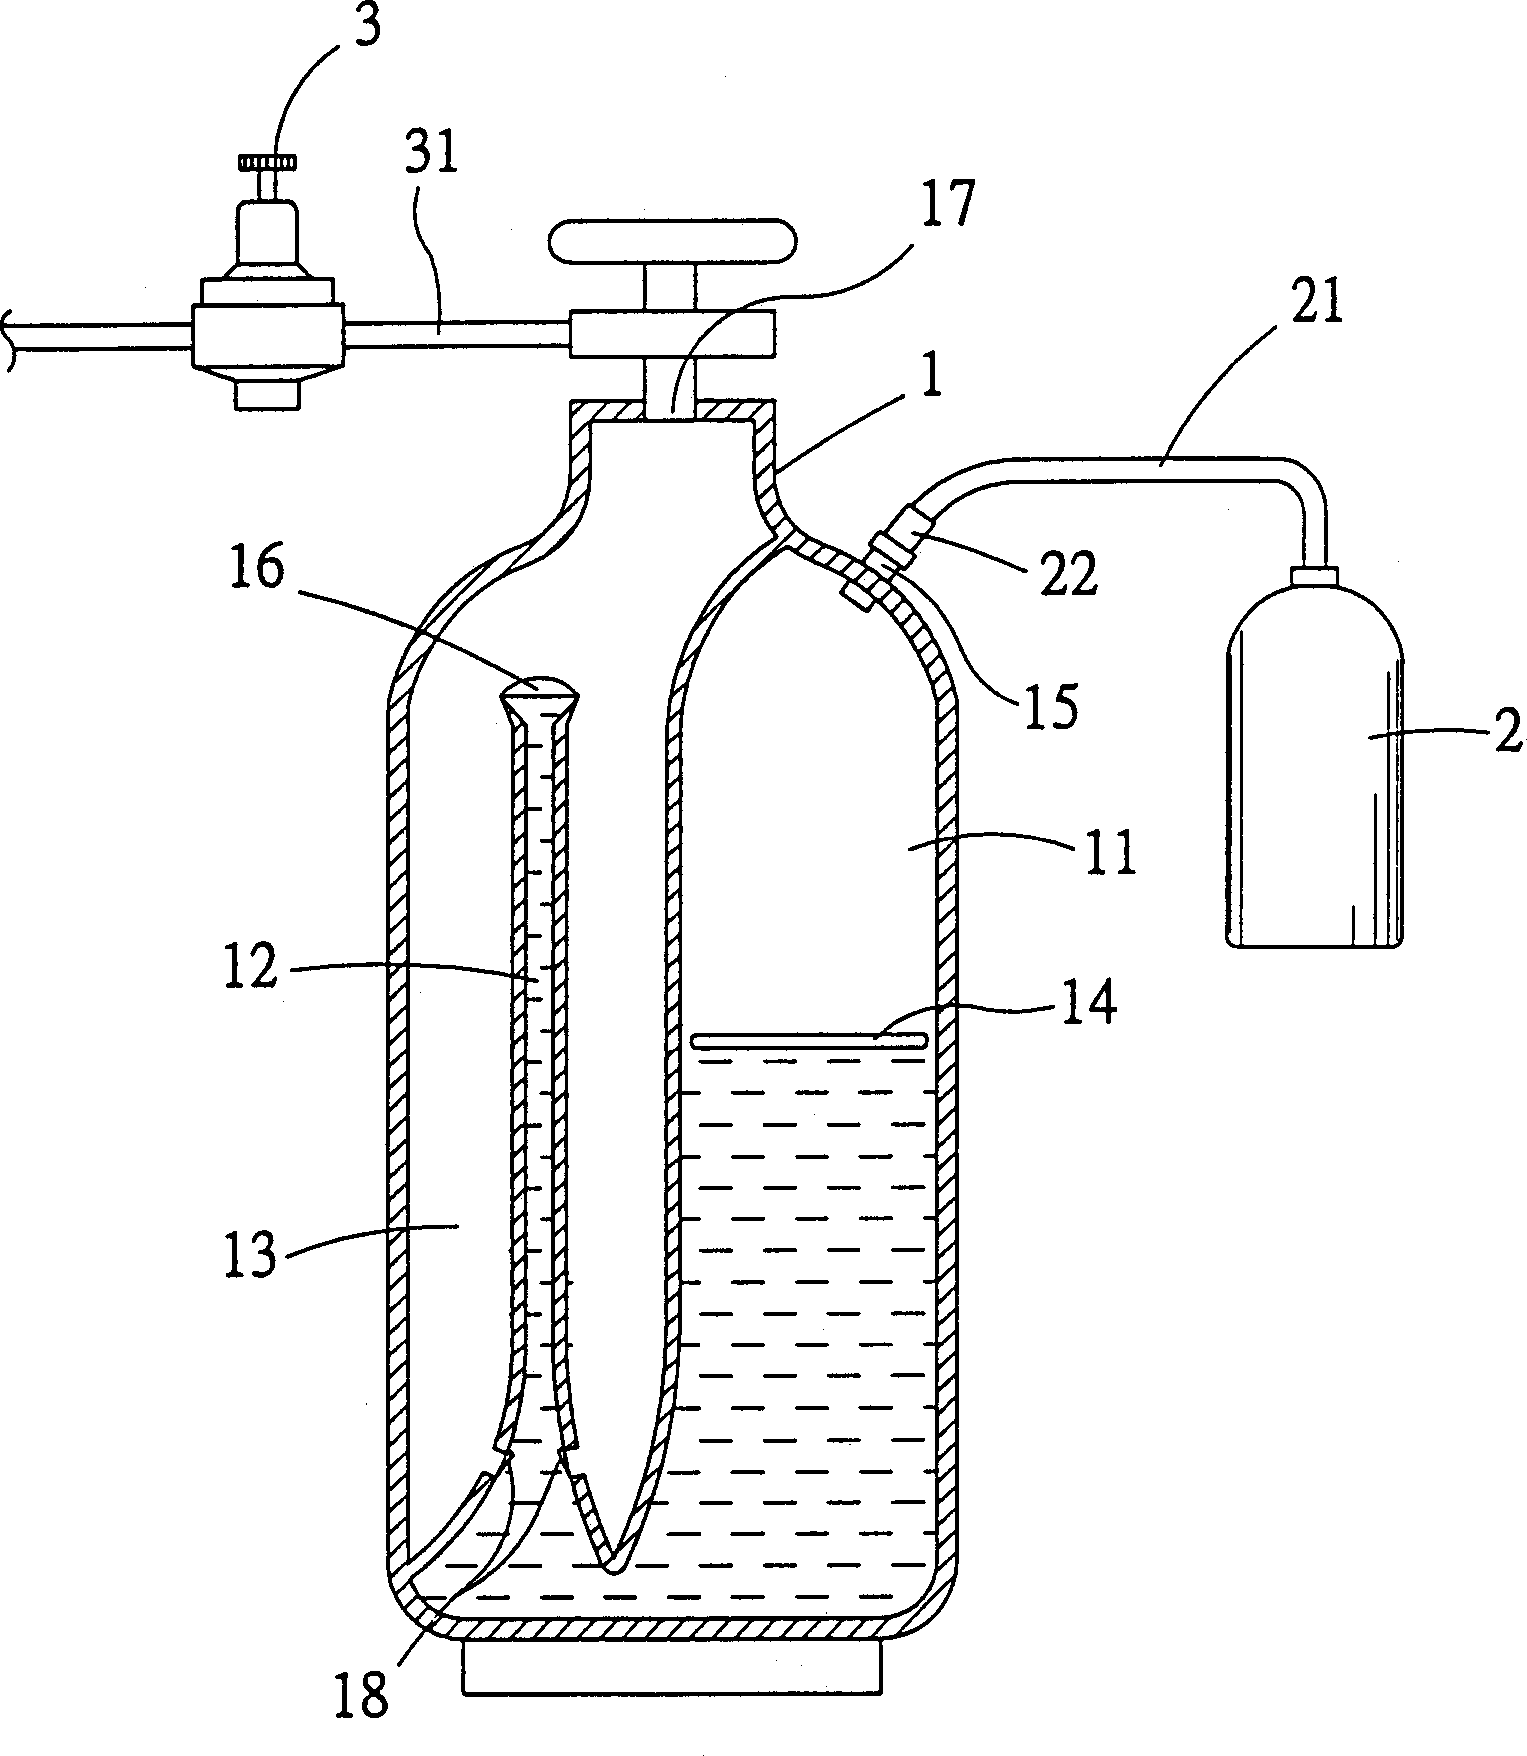 Gas supplying device